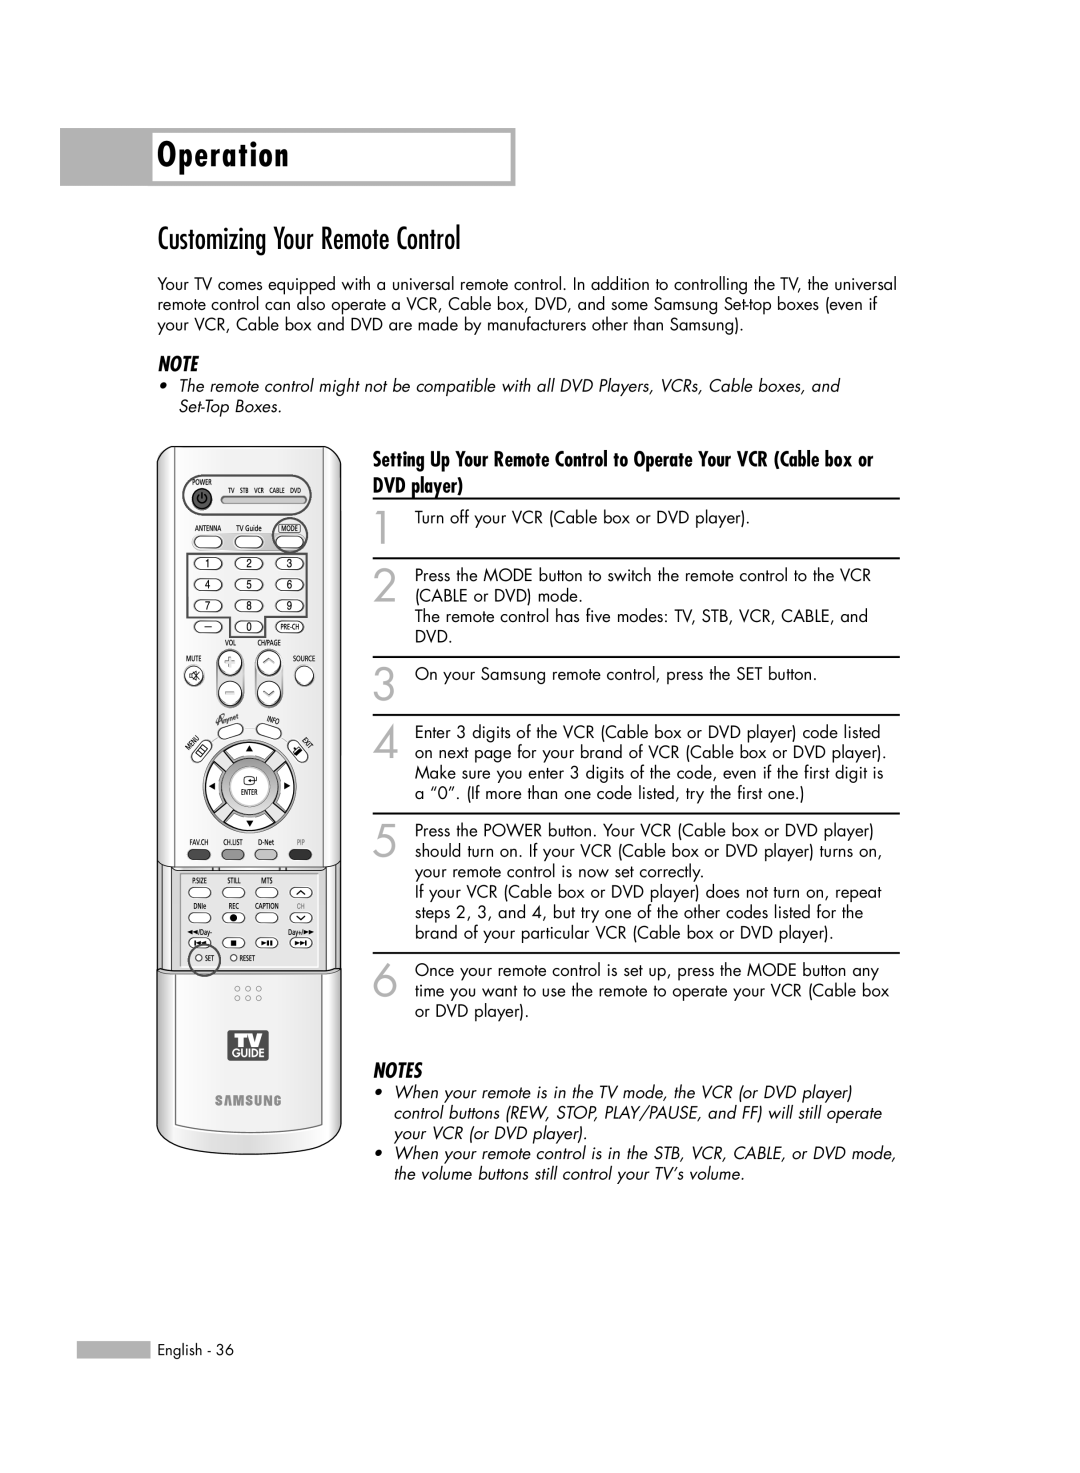 Samsung HL-R6178W, HL-R5678W, HL-R7178W manual Customizing Your Remote Control, Operation, DVD player, Notes 